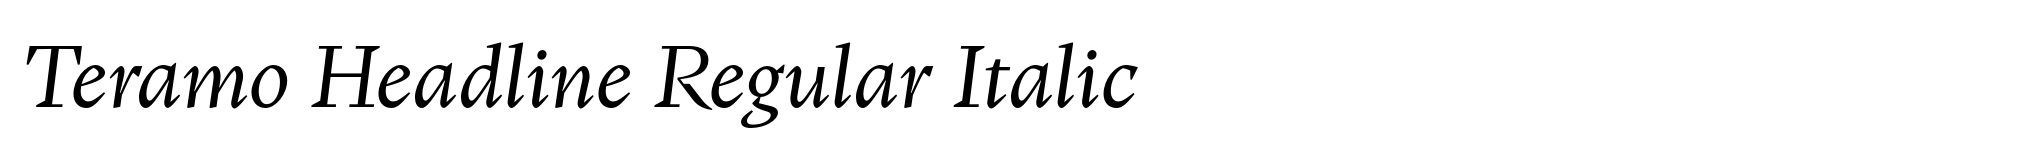 Teramo Headline Regular Italic image